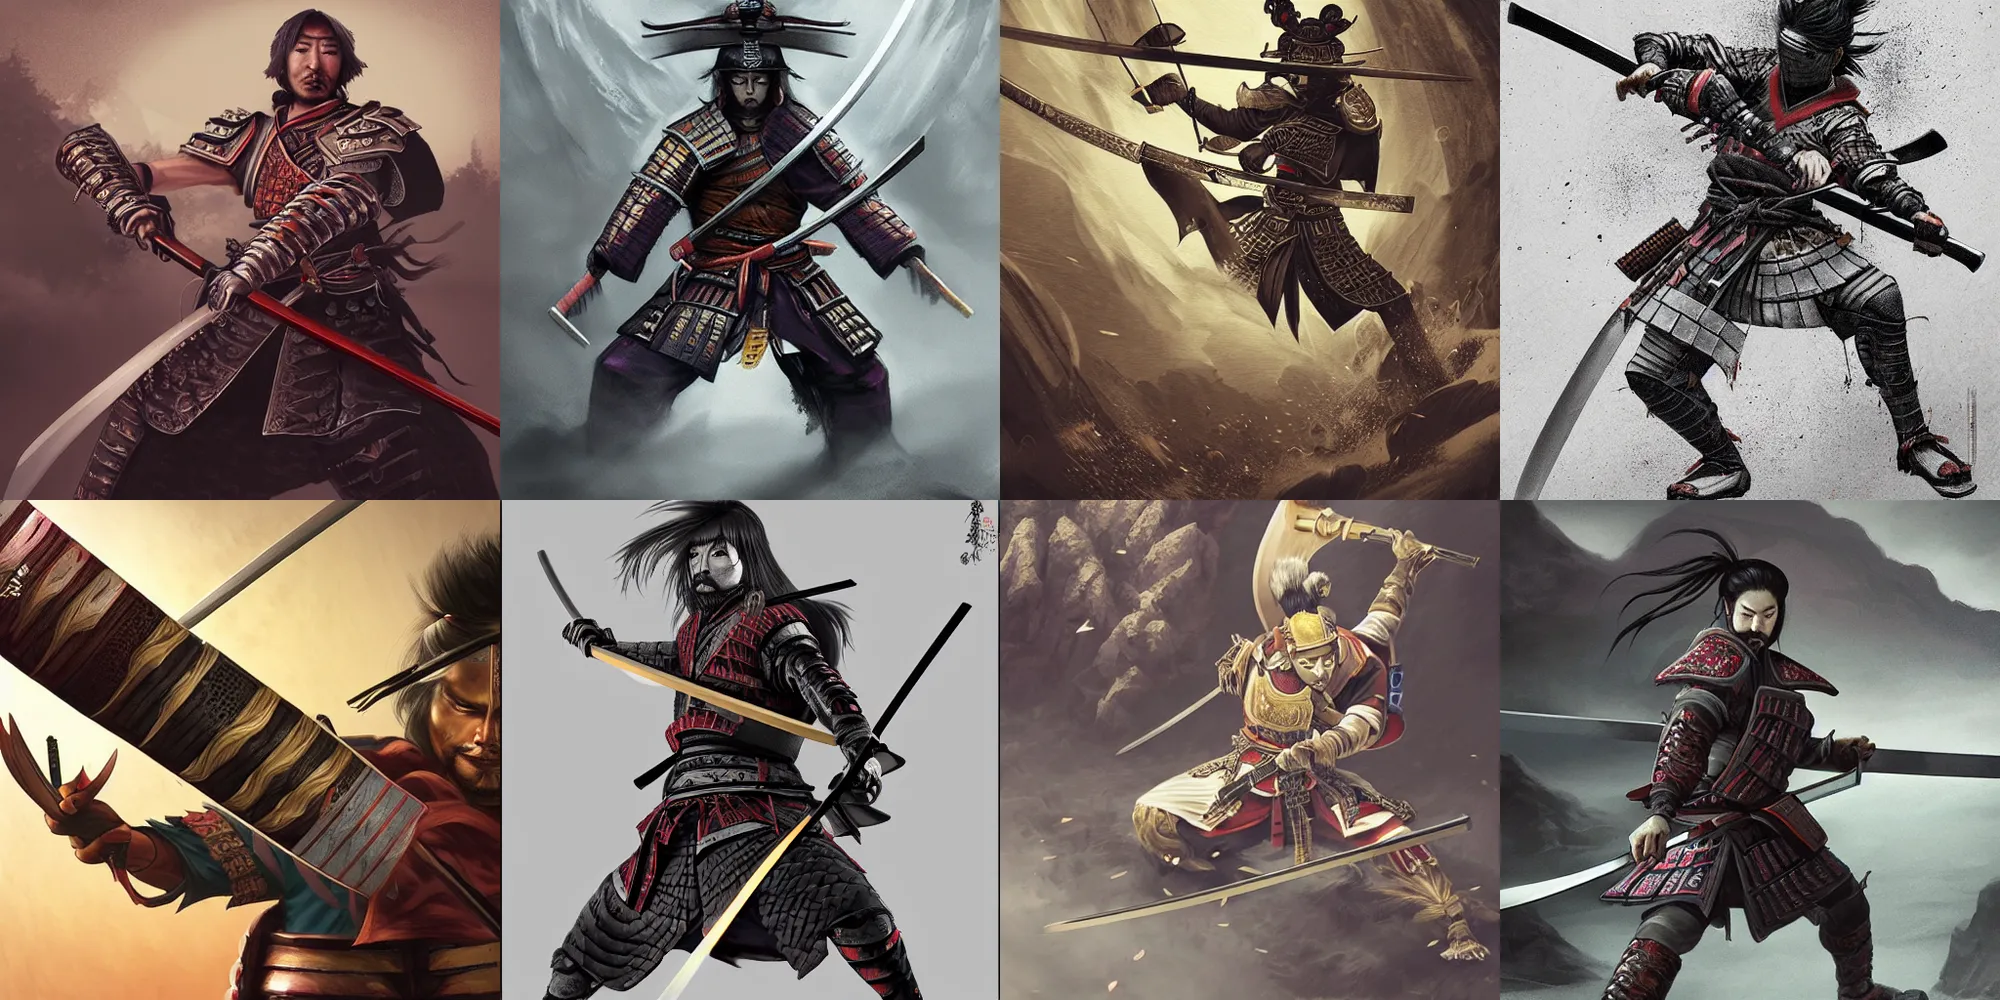 Prompt: epic samurai wielding a magnificent katana, fantasy 8k art, trending on artstation, insanely detailed